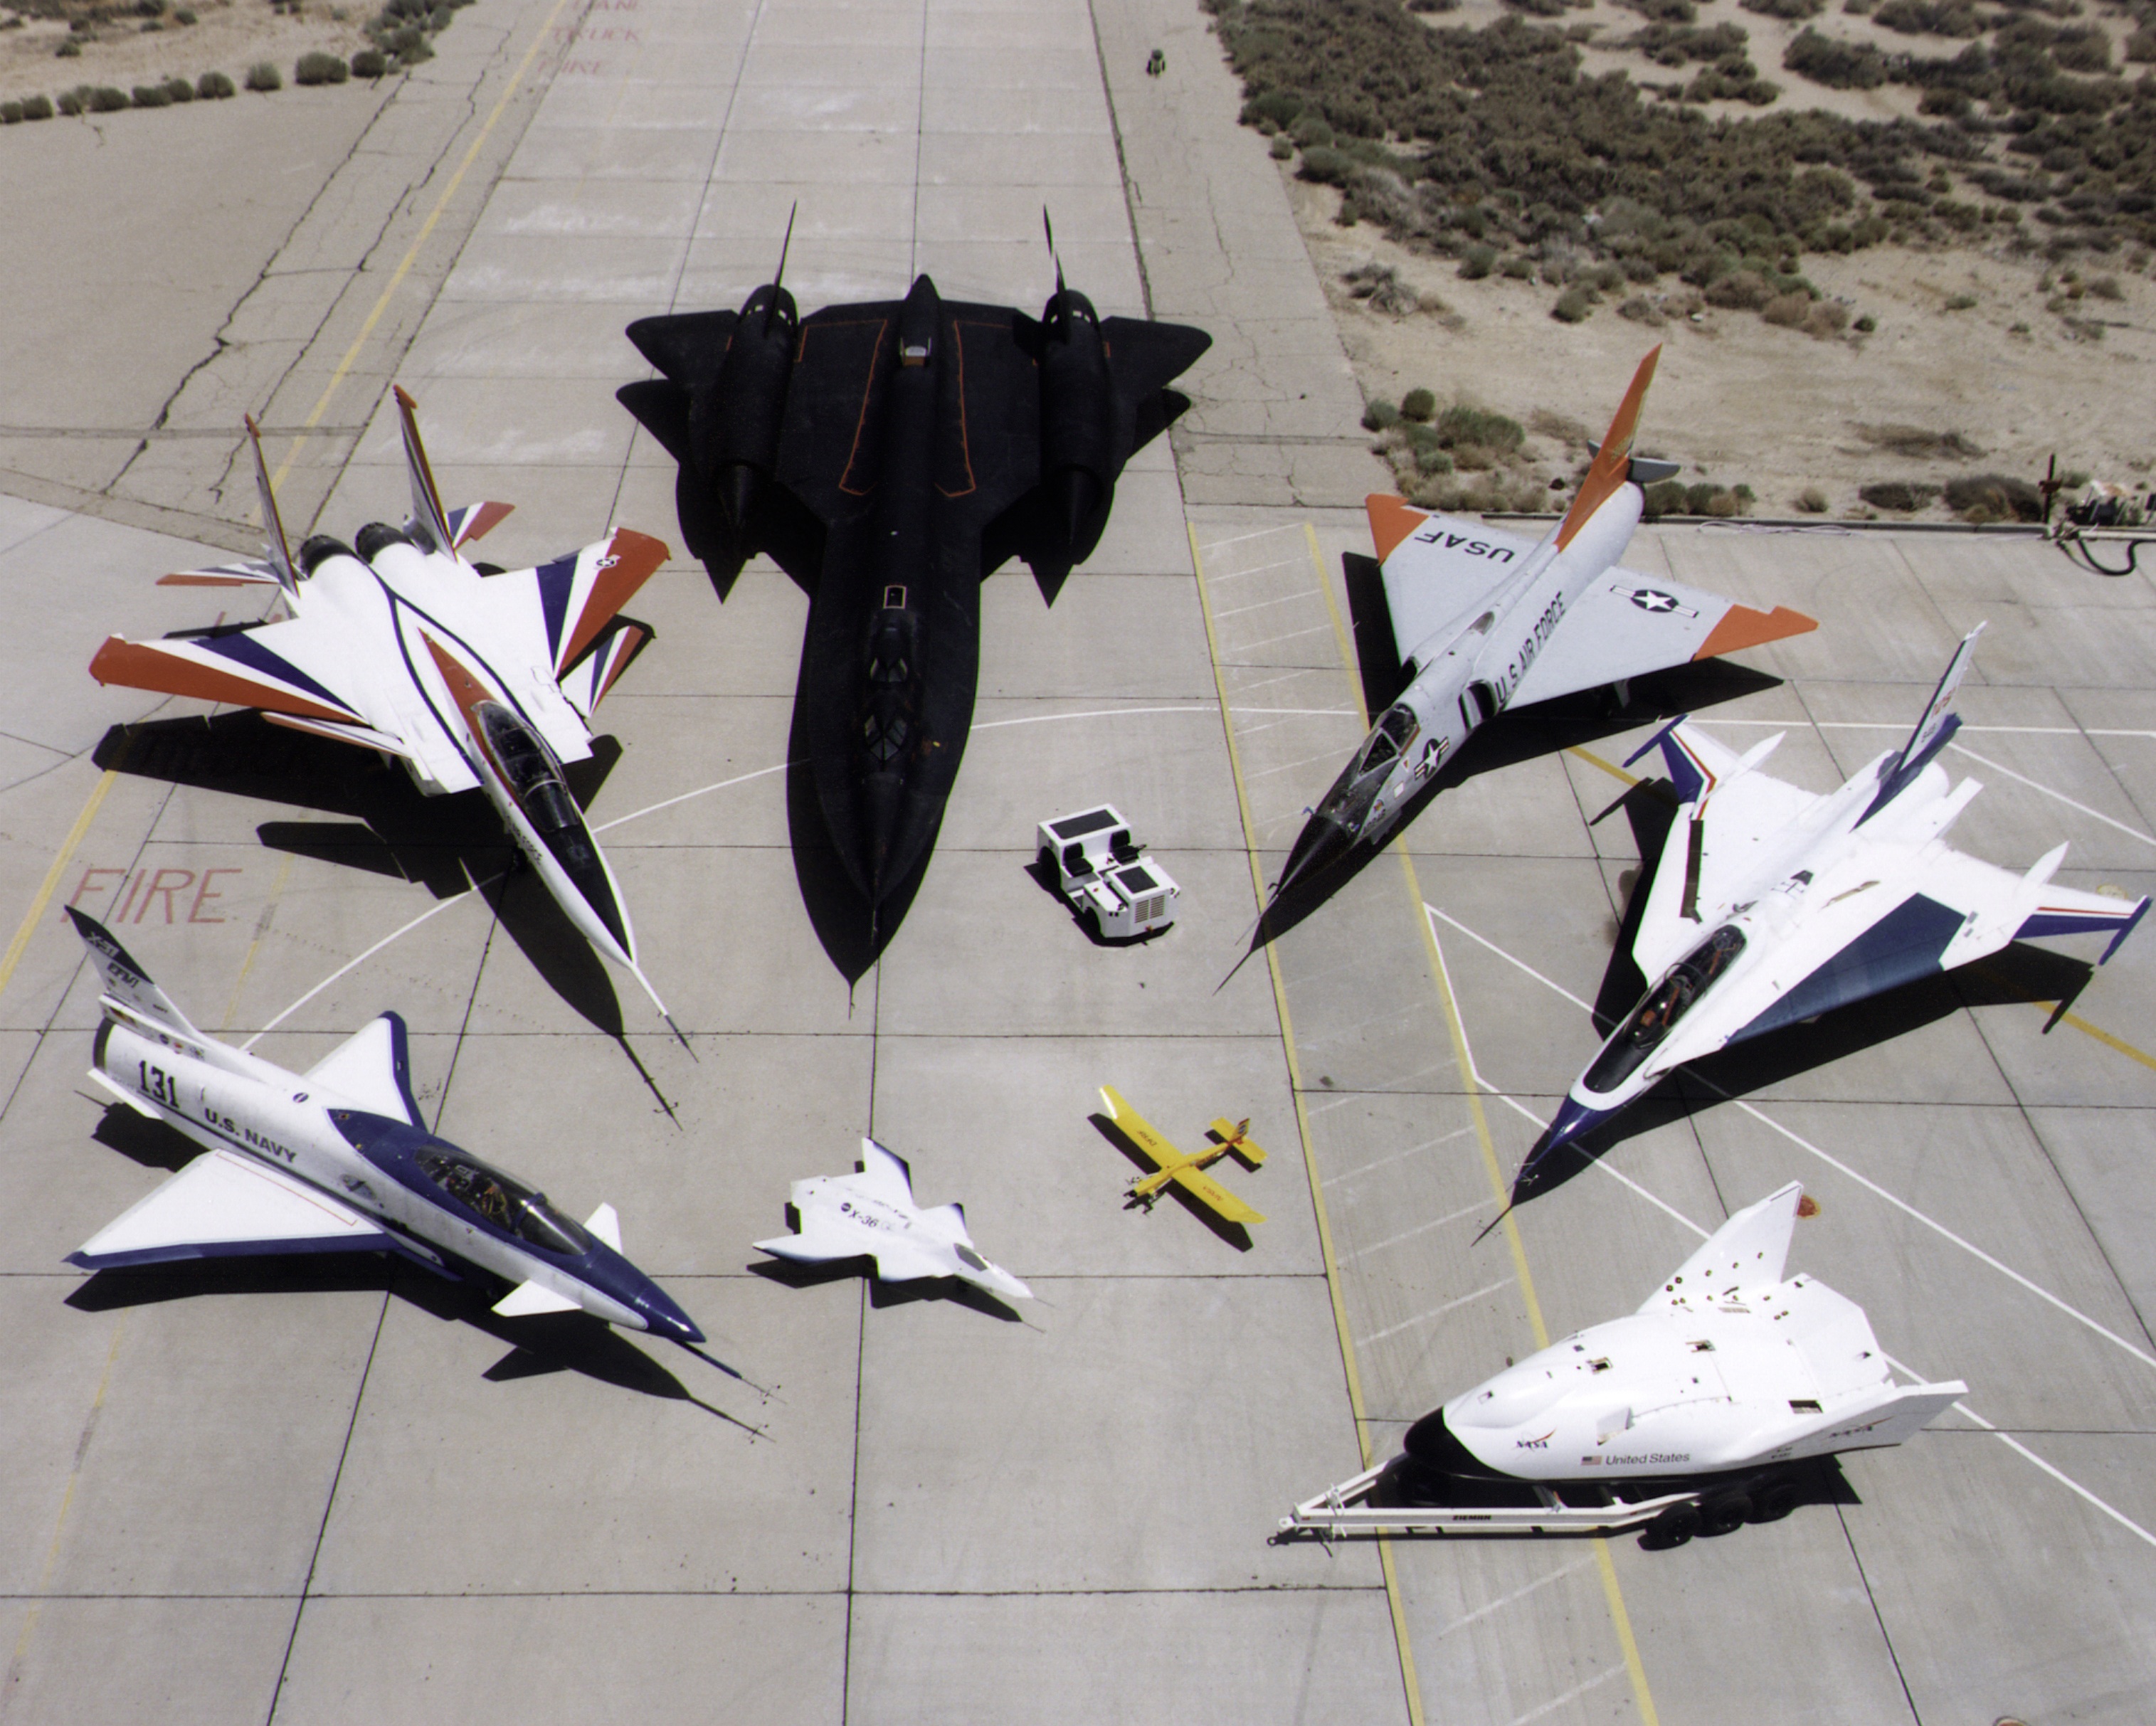 Nasa research aircraft fleet photo